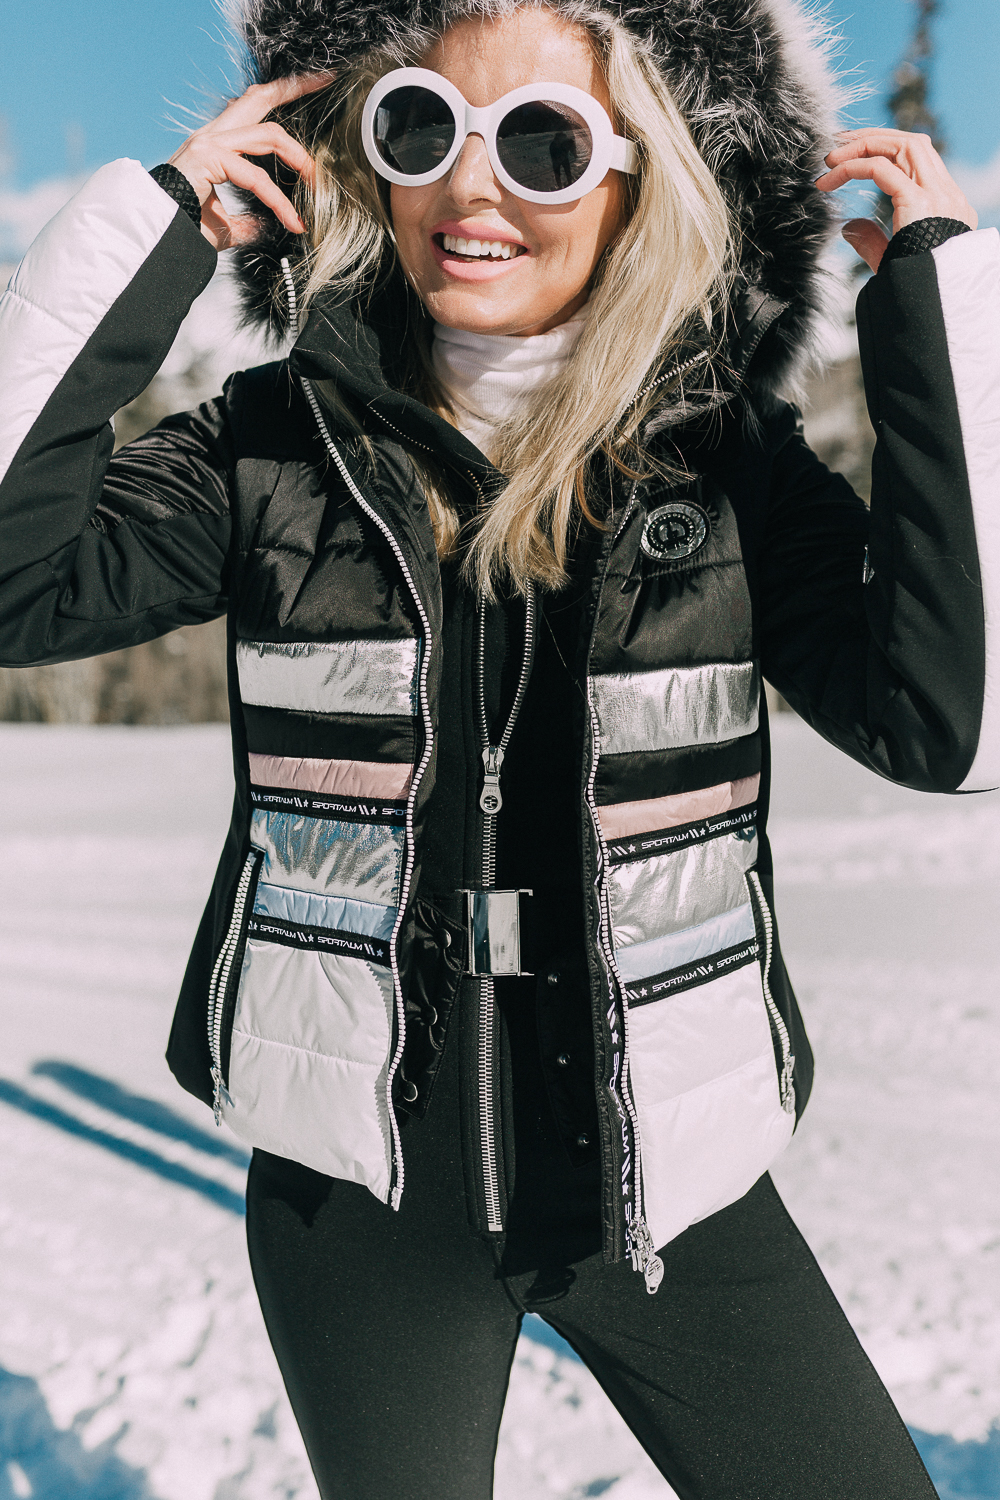 Best Ski Brands for Women, one-piece ski suit jumpsuit by Cordova